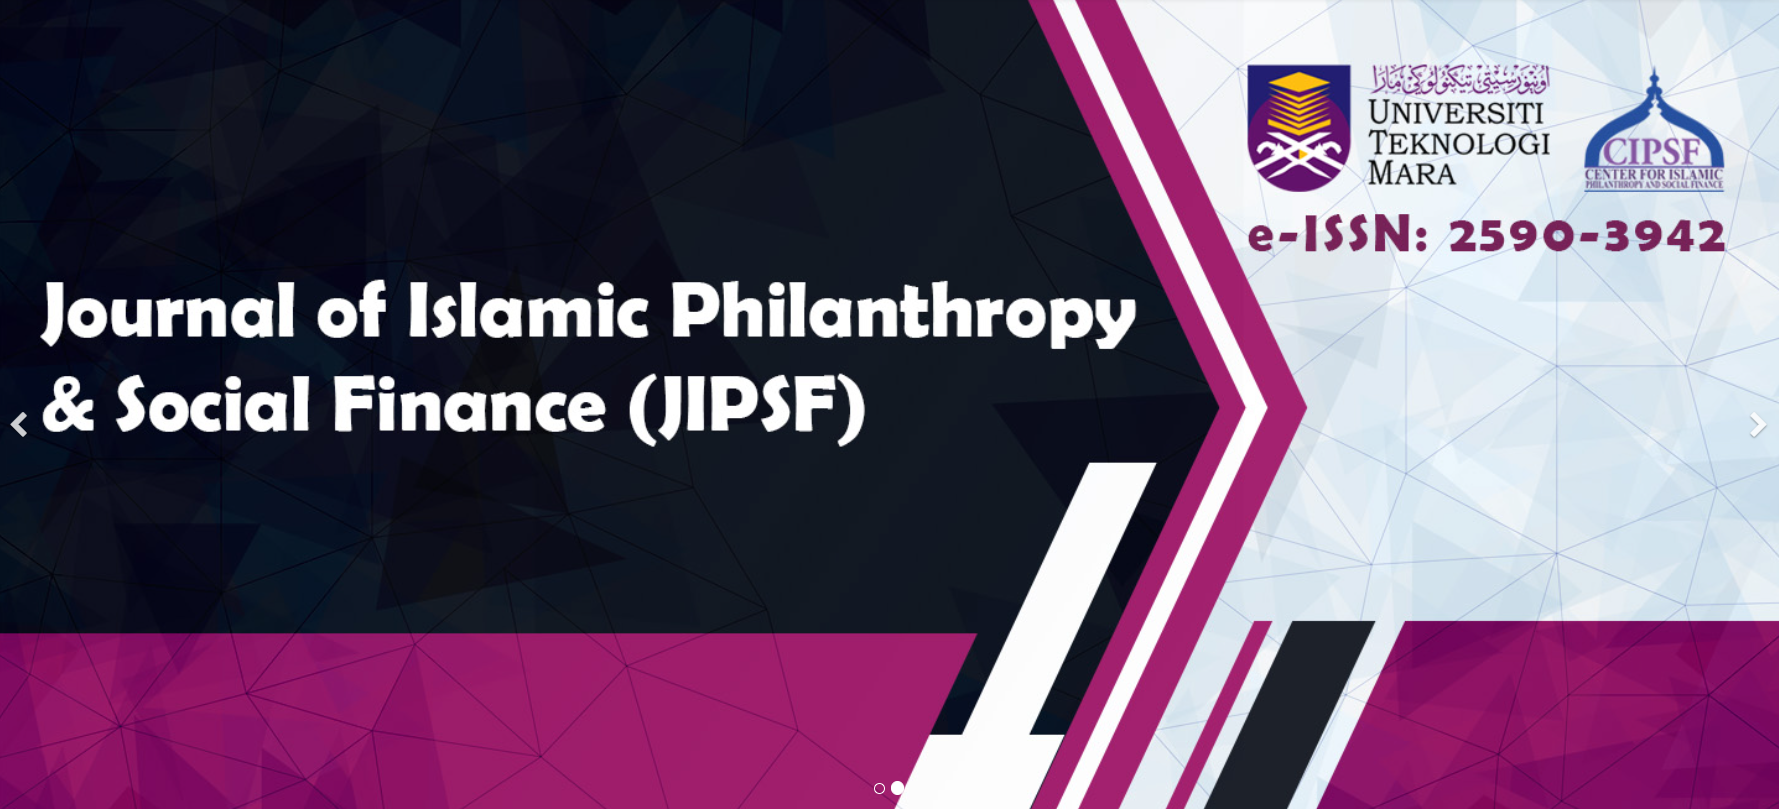 Journal of Islamic Philanthropy & Social Finance